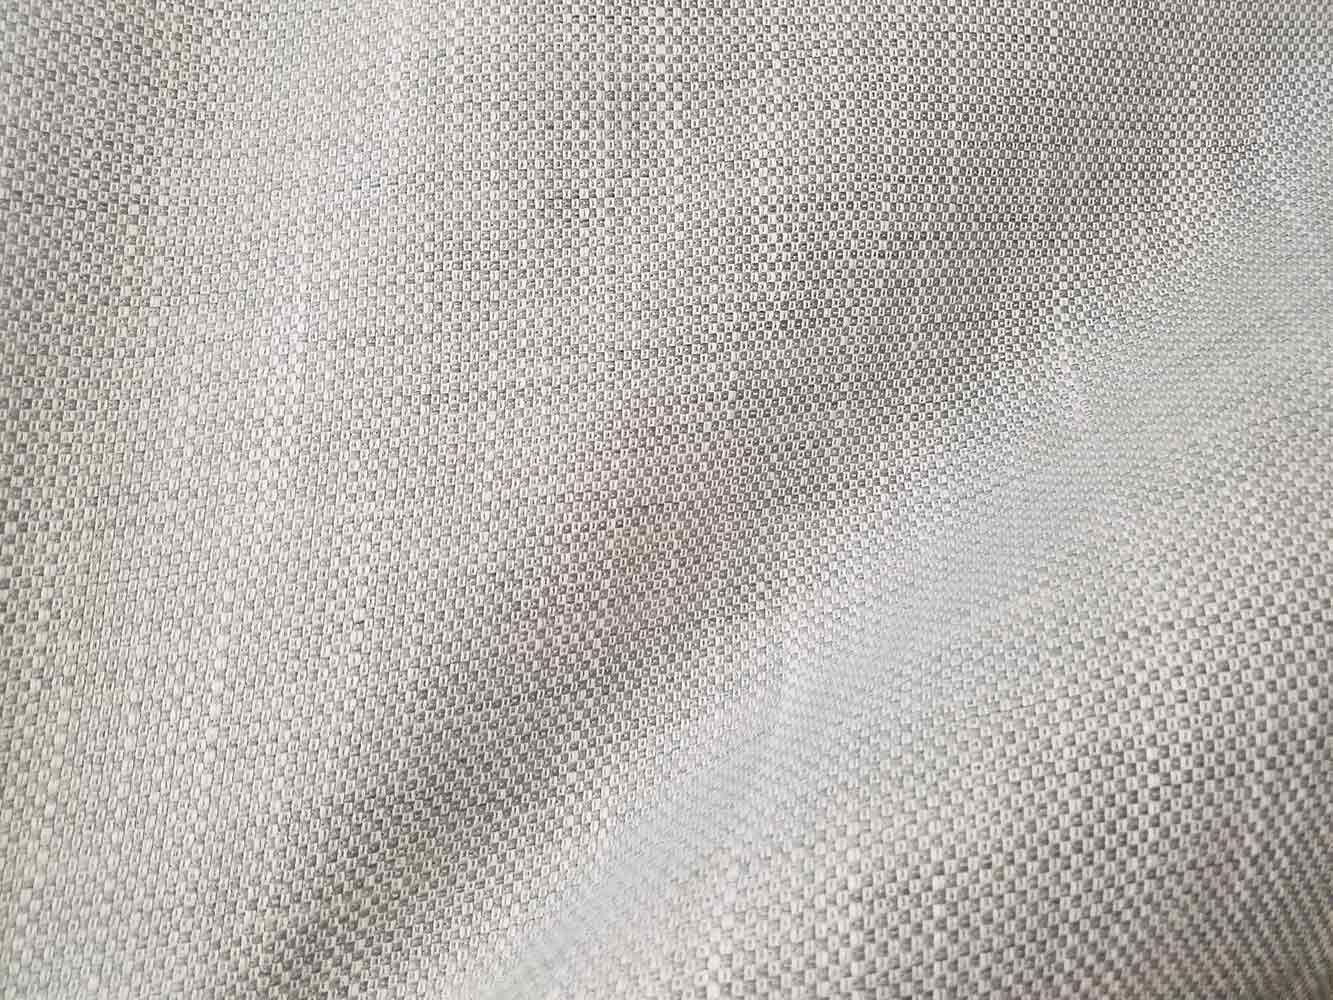 Melange Denim Blue Outdoor Tweed-Look Fabric - RichTex Fabrics ...